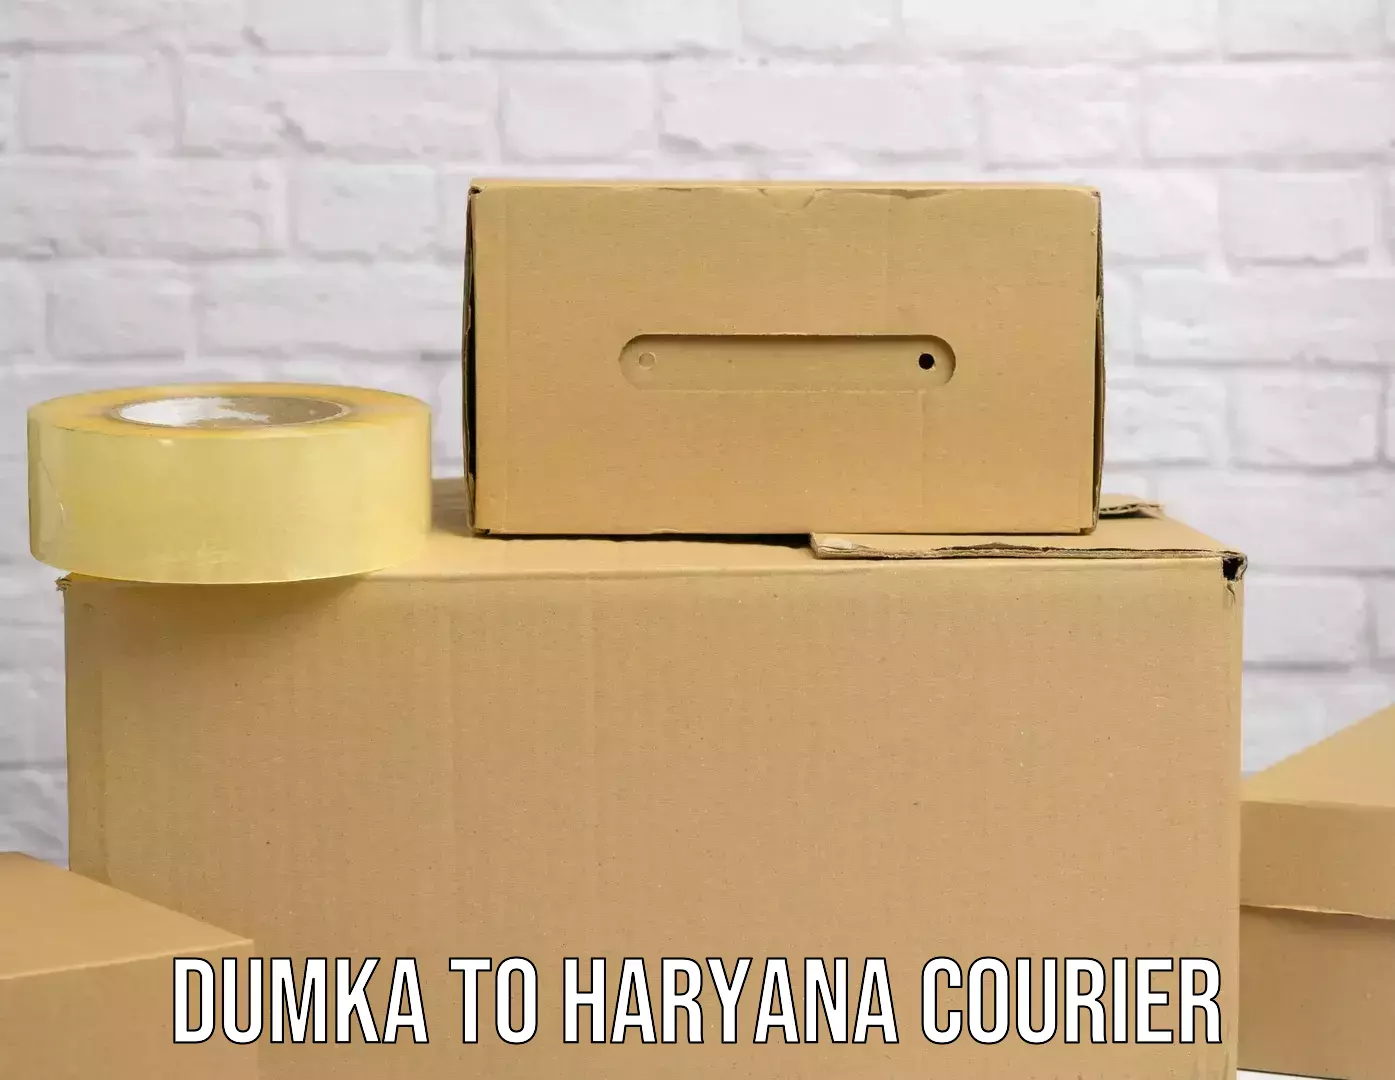 Express courier capabilities Dumka to Loharu